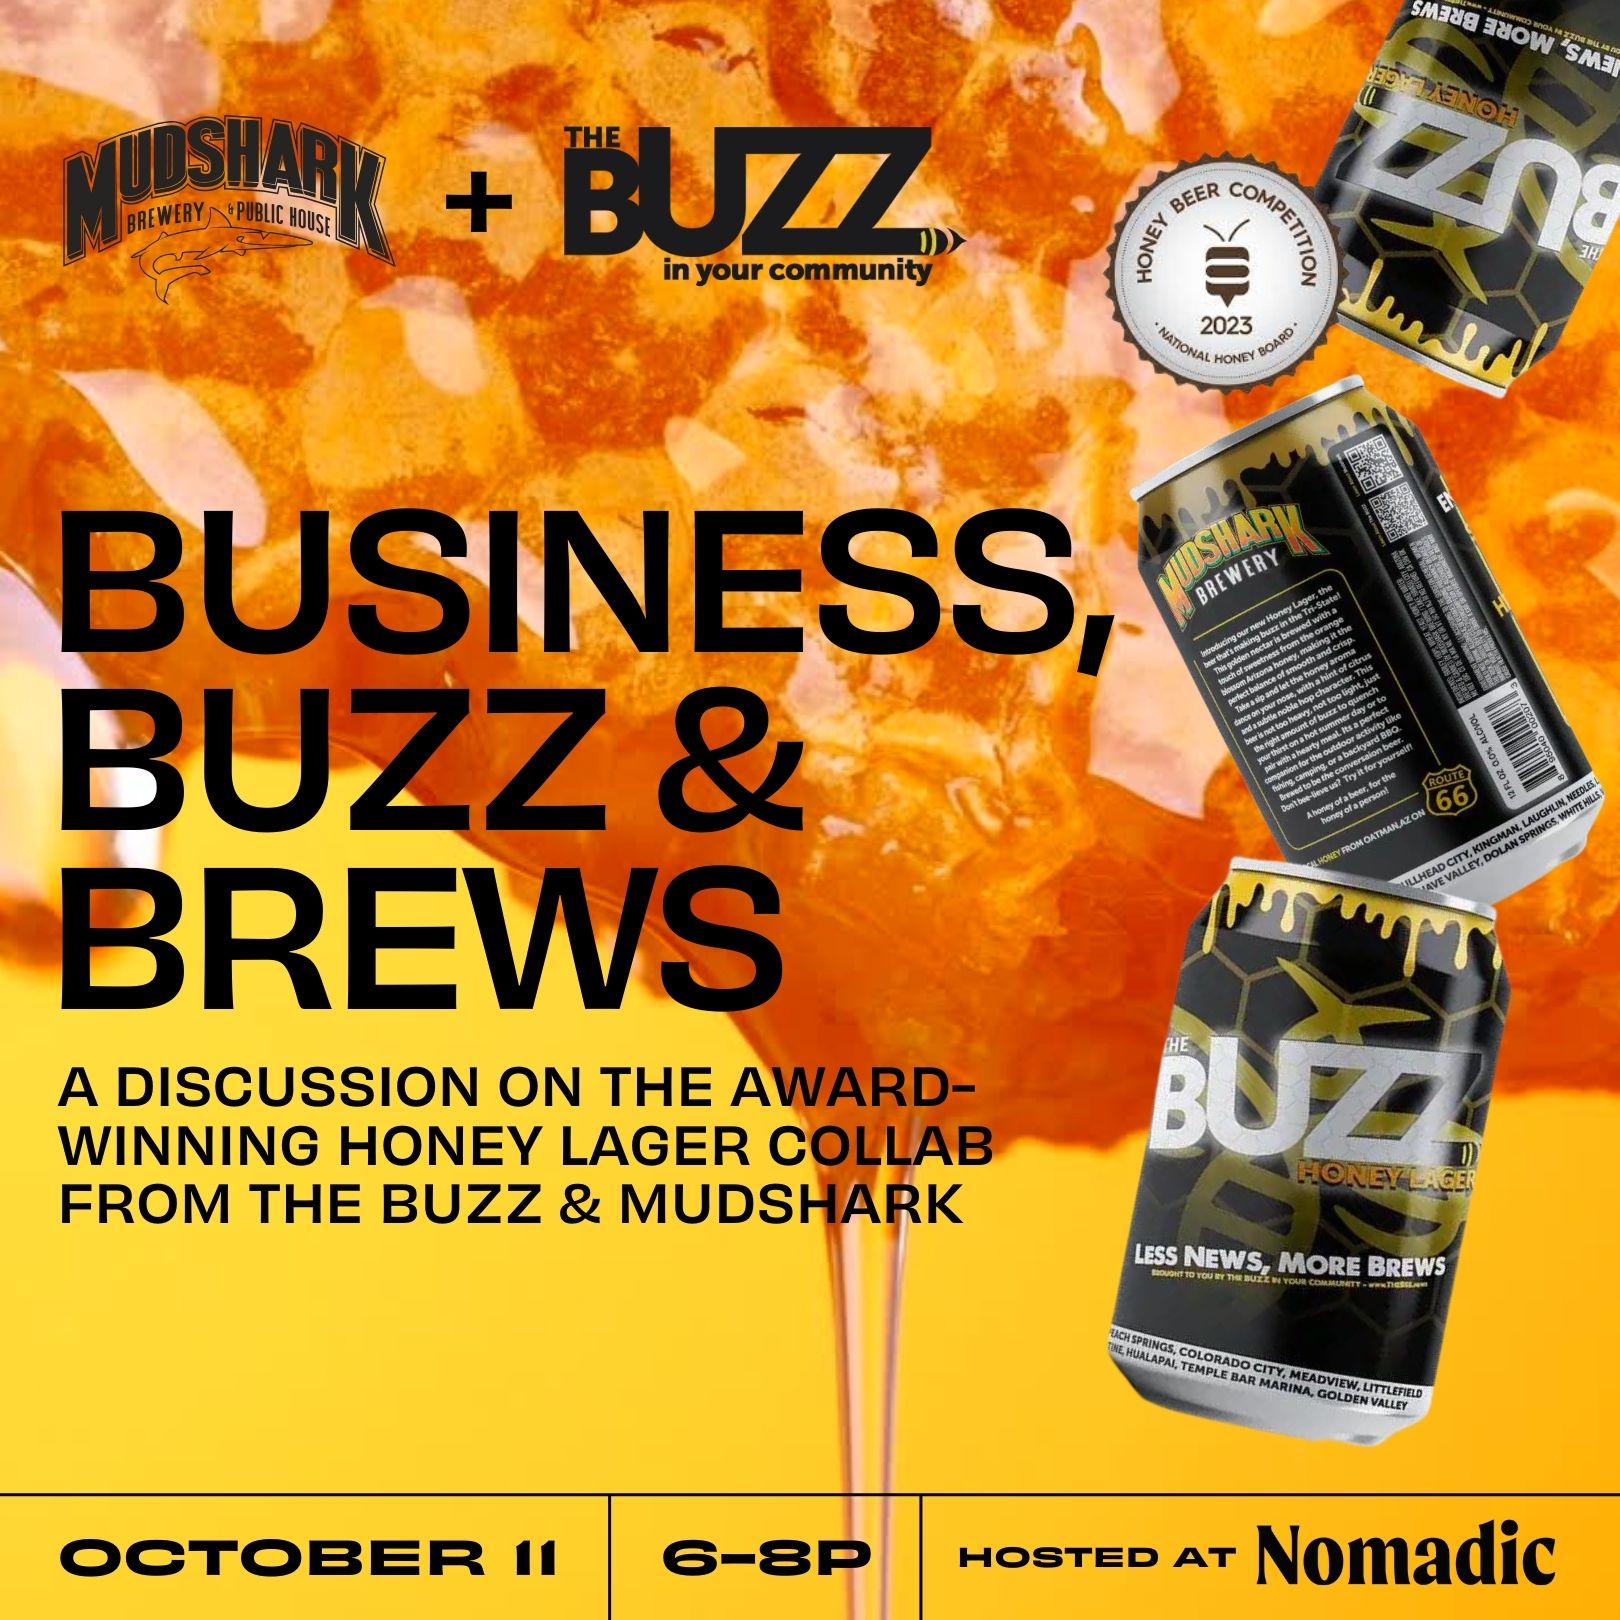 Business, Buzz & Brews